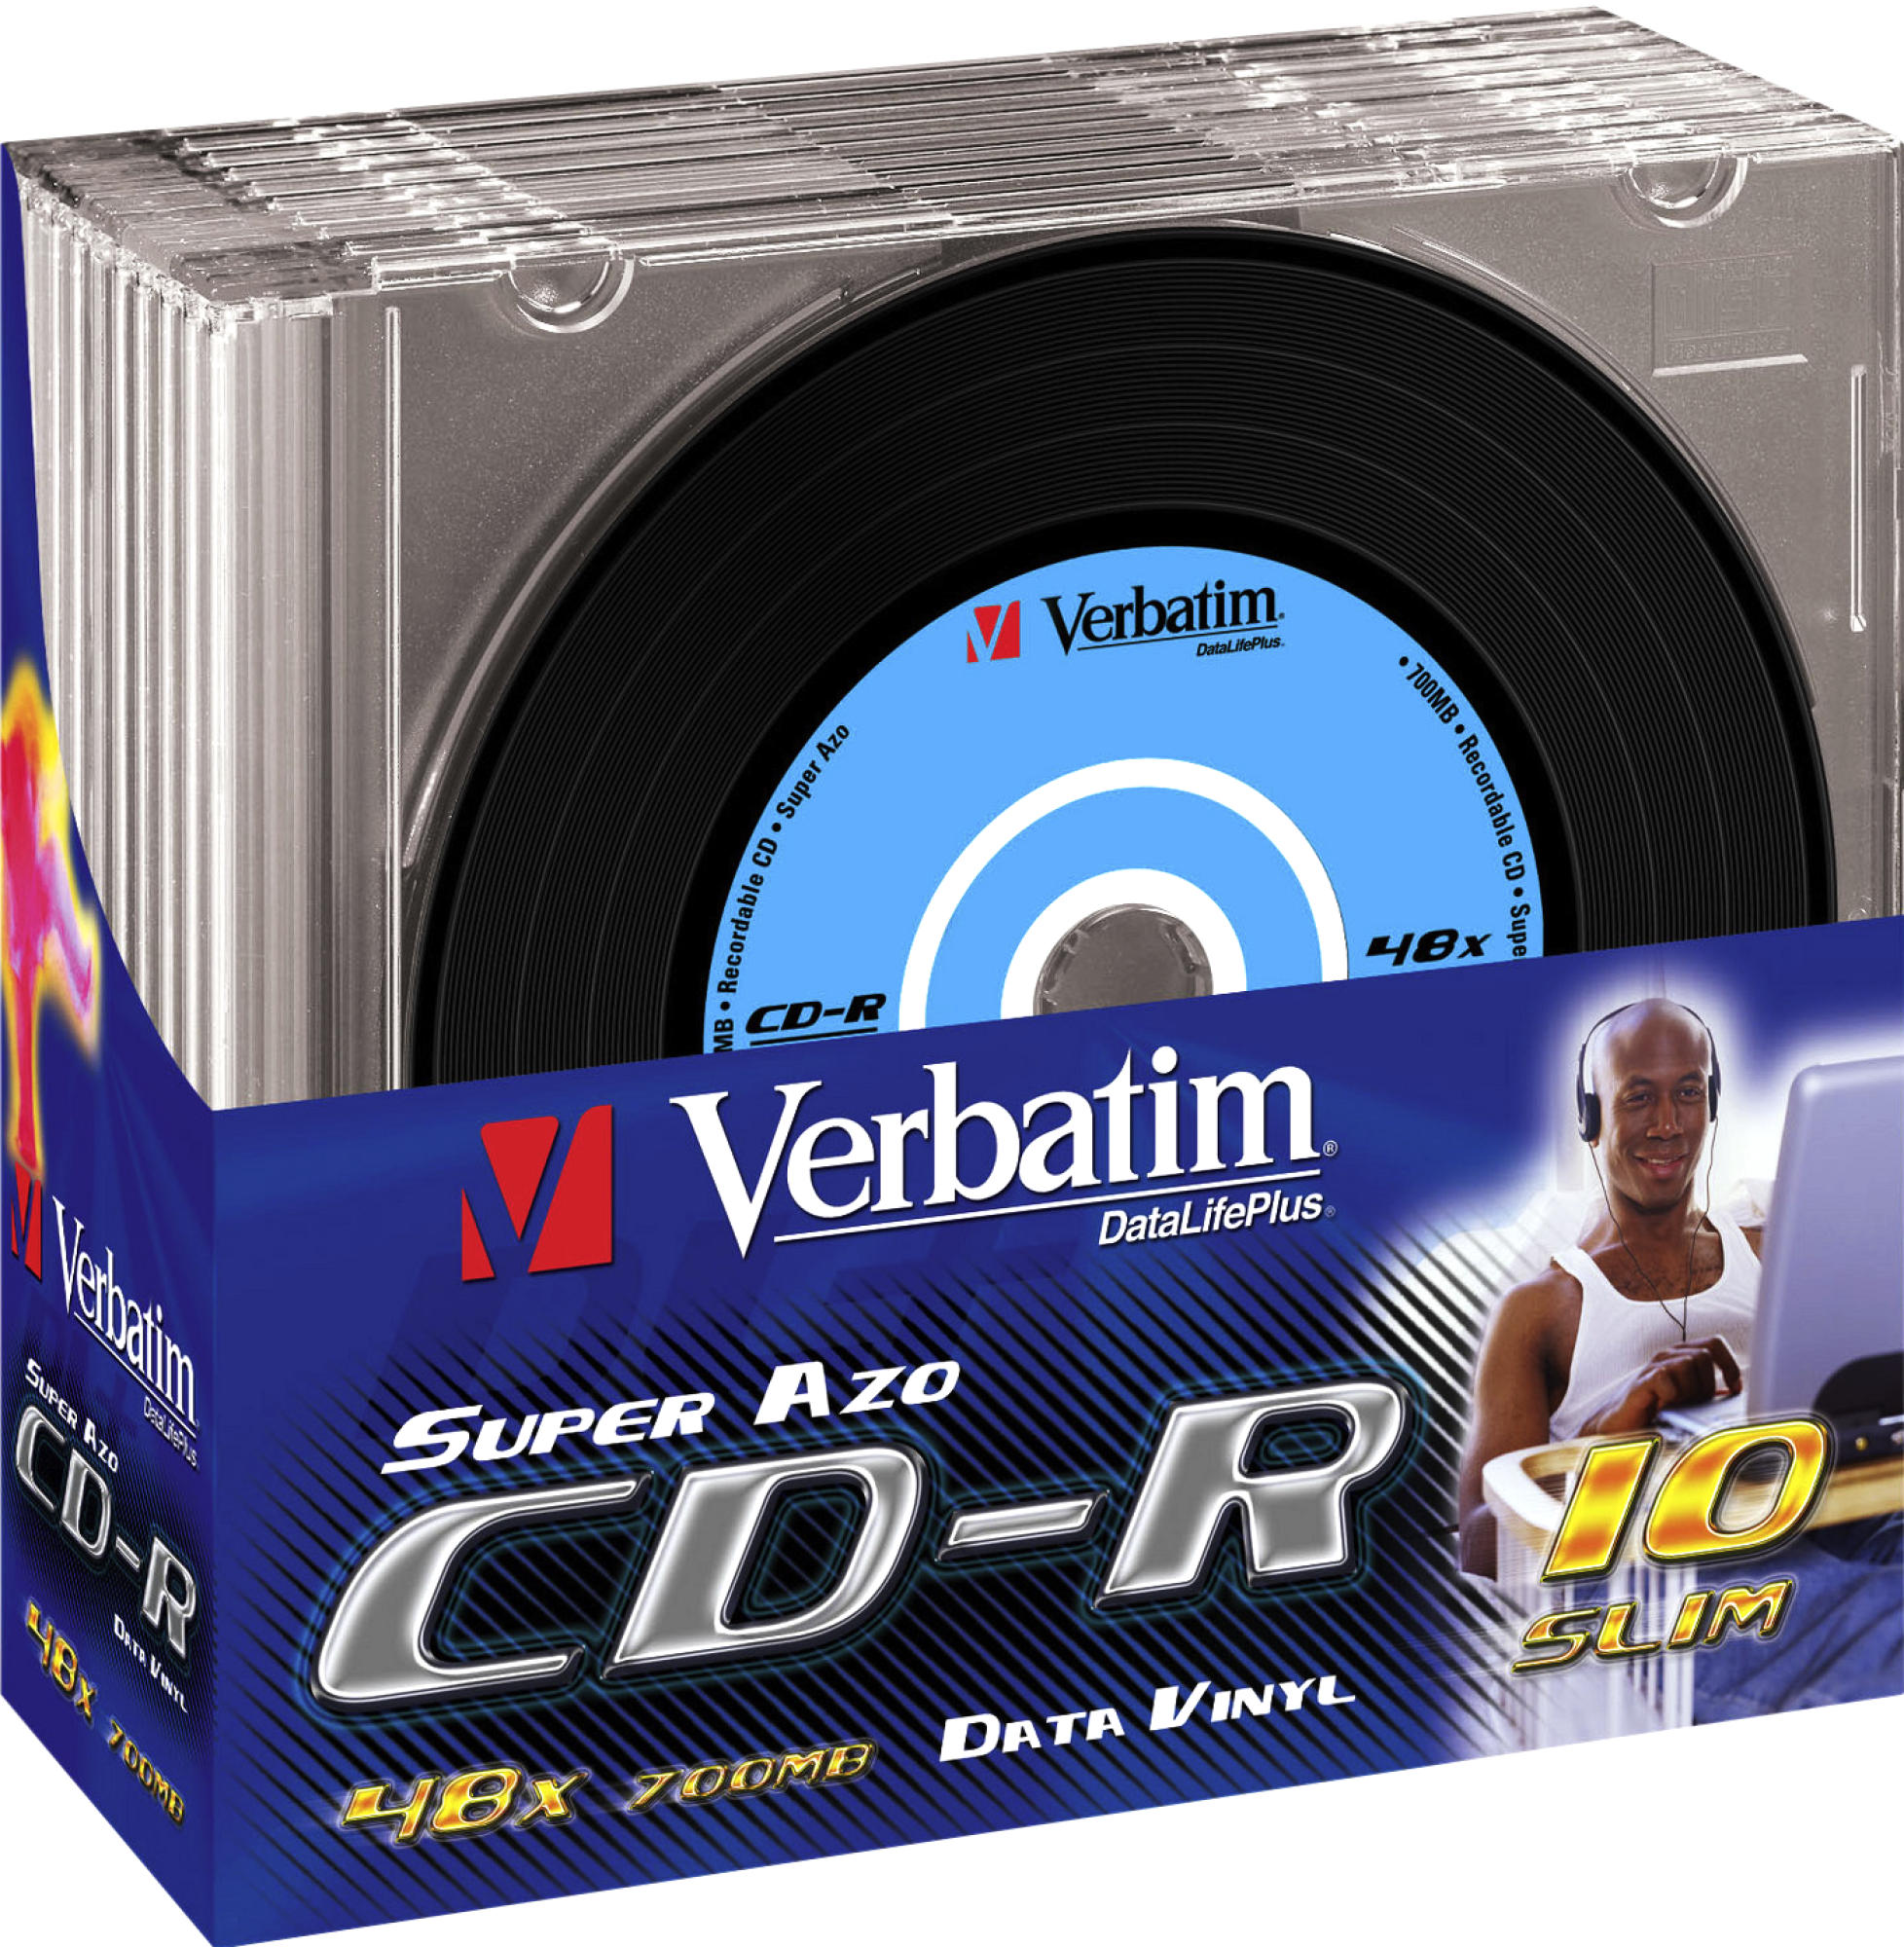 VERBATIM 43426 SLIM 52X VINYL CD-R 700MB Rohling